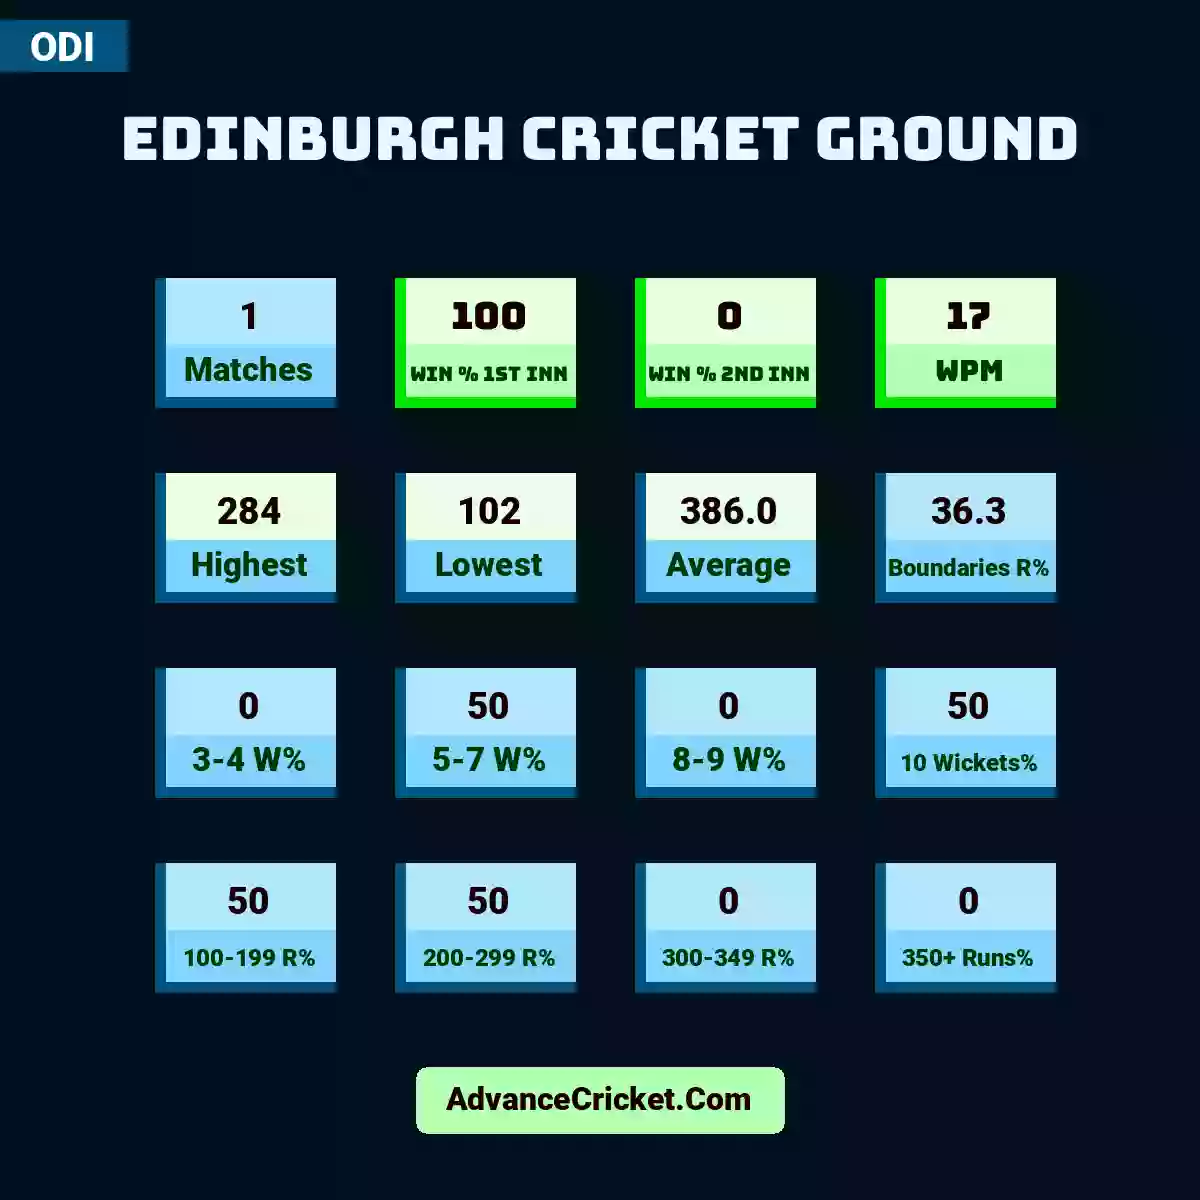 Image showing Edinburgh Cricket Ground with Matches: 1, Win % 1st Inn: 100, Win % 2nd Inn: 0, WPM: 17, Highest: 284, Lowest: 102, Average: 386.0, Boundaries R%: 36.3, 3-4 W%: 0, 5-7 W%: 50, 8-9 W%: 0, 10 Wickets%: 50, 100-199 R%: 50, 200-299 R%: 50, 300-349 R%: 0, 350+ Runs%: 0.